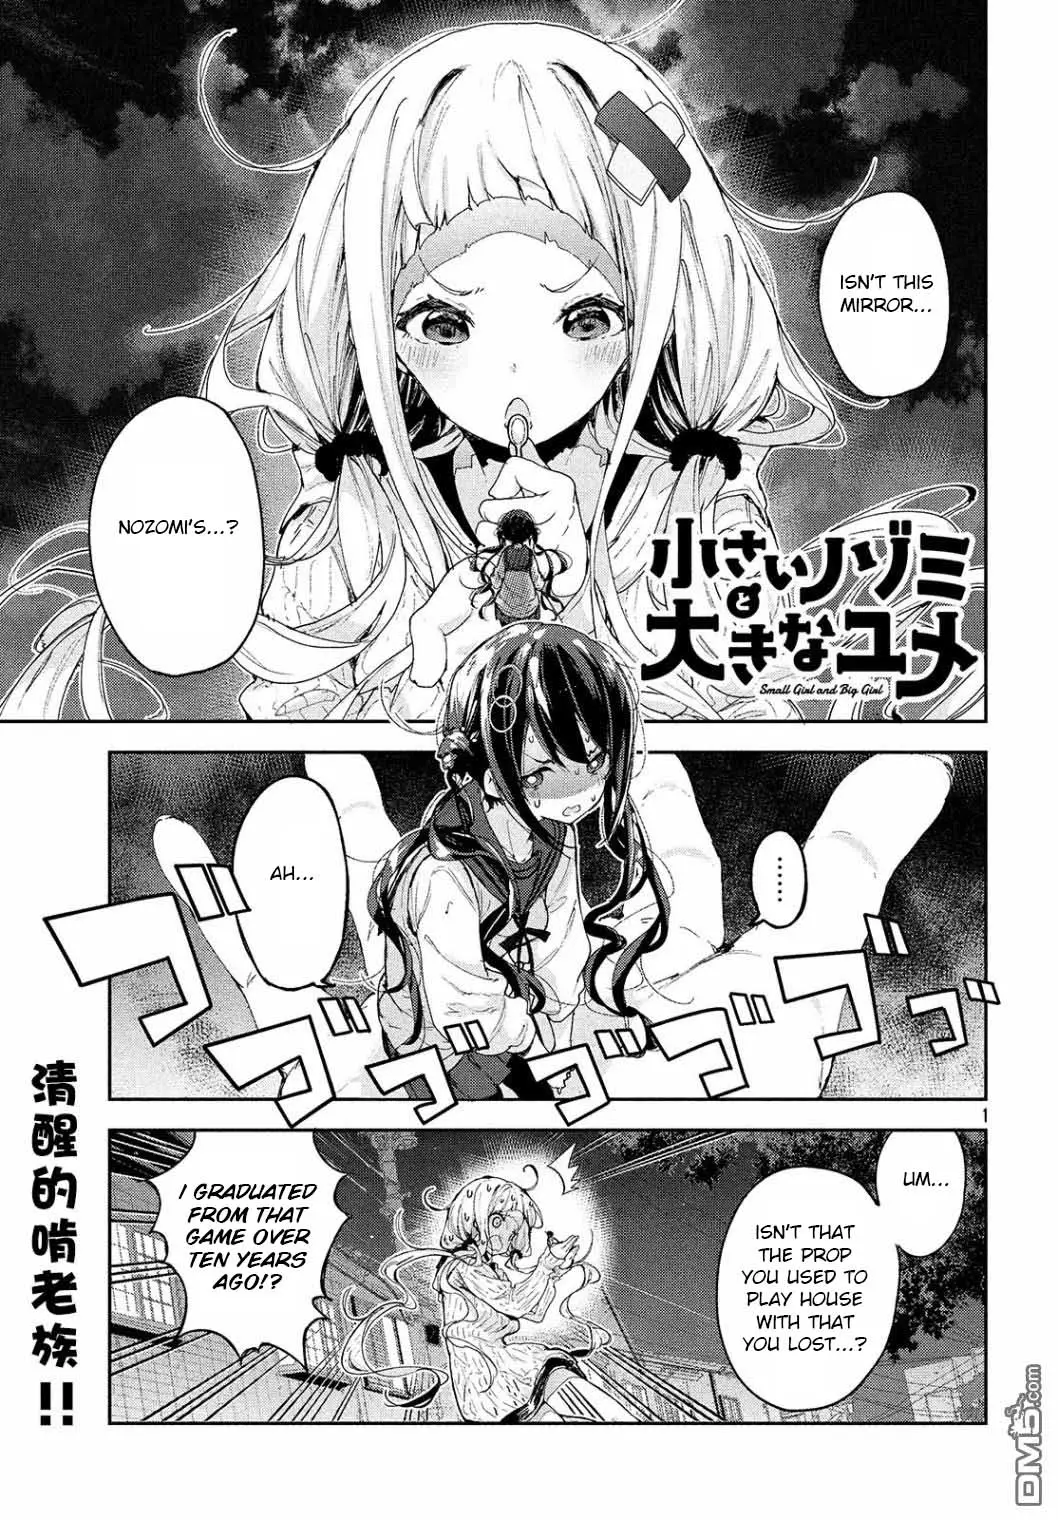 Chiisai Nozomi To Ooki Na Yume - 14 page 2